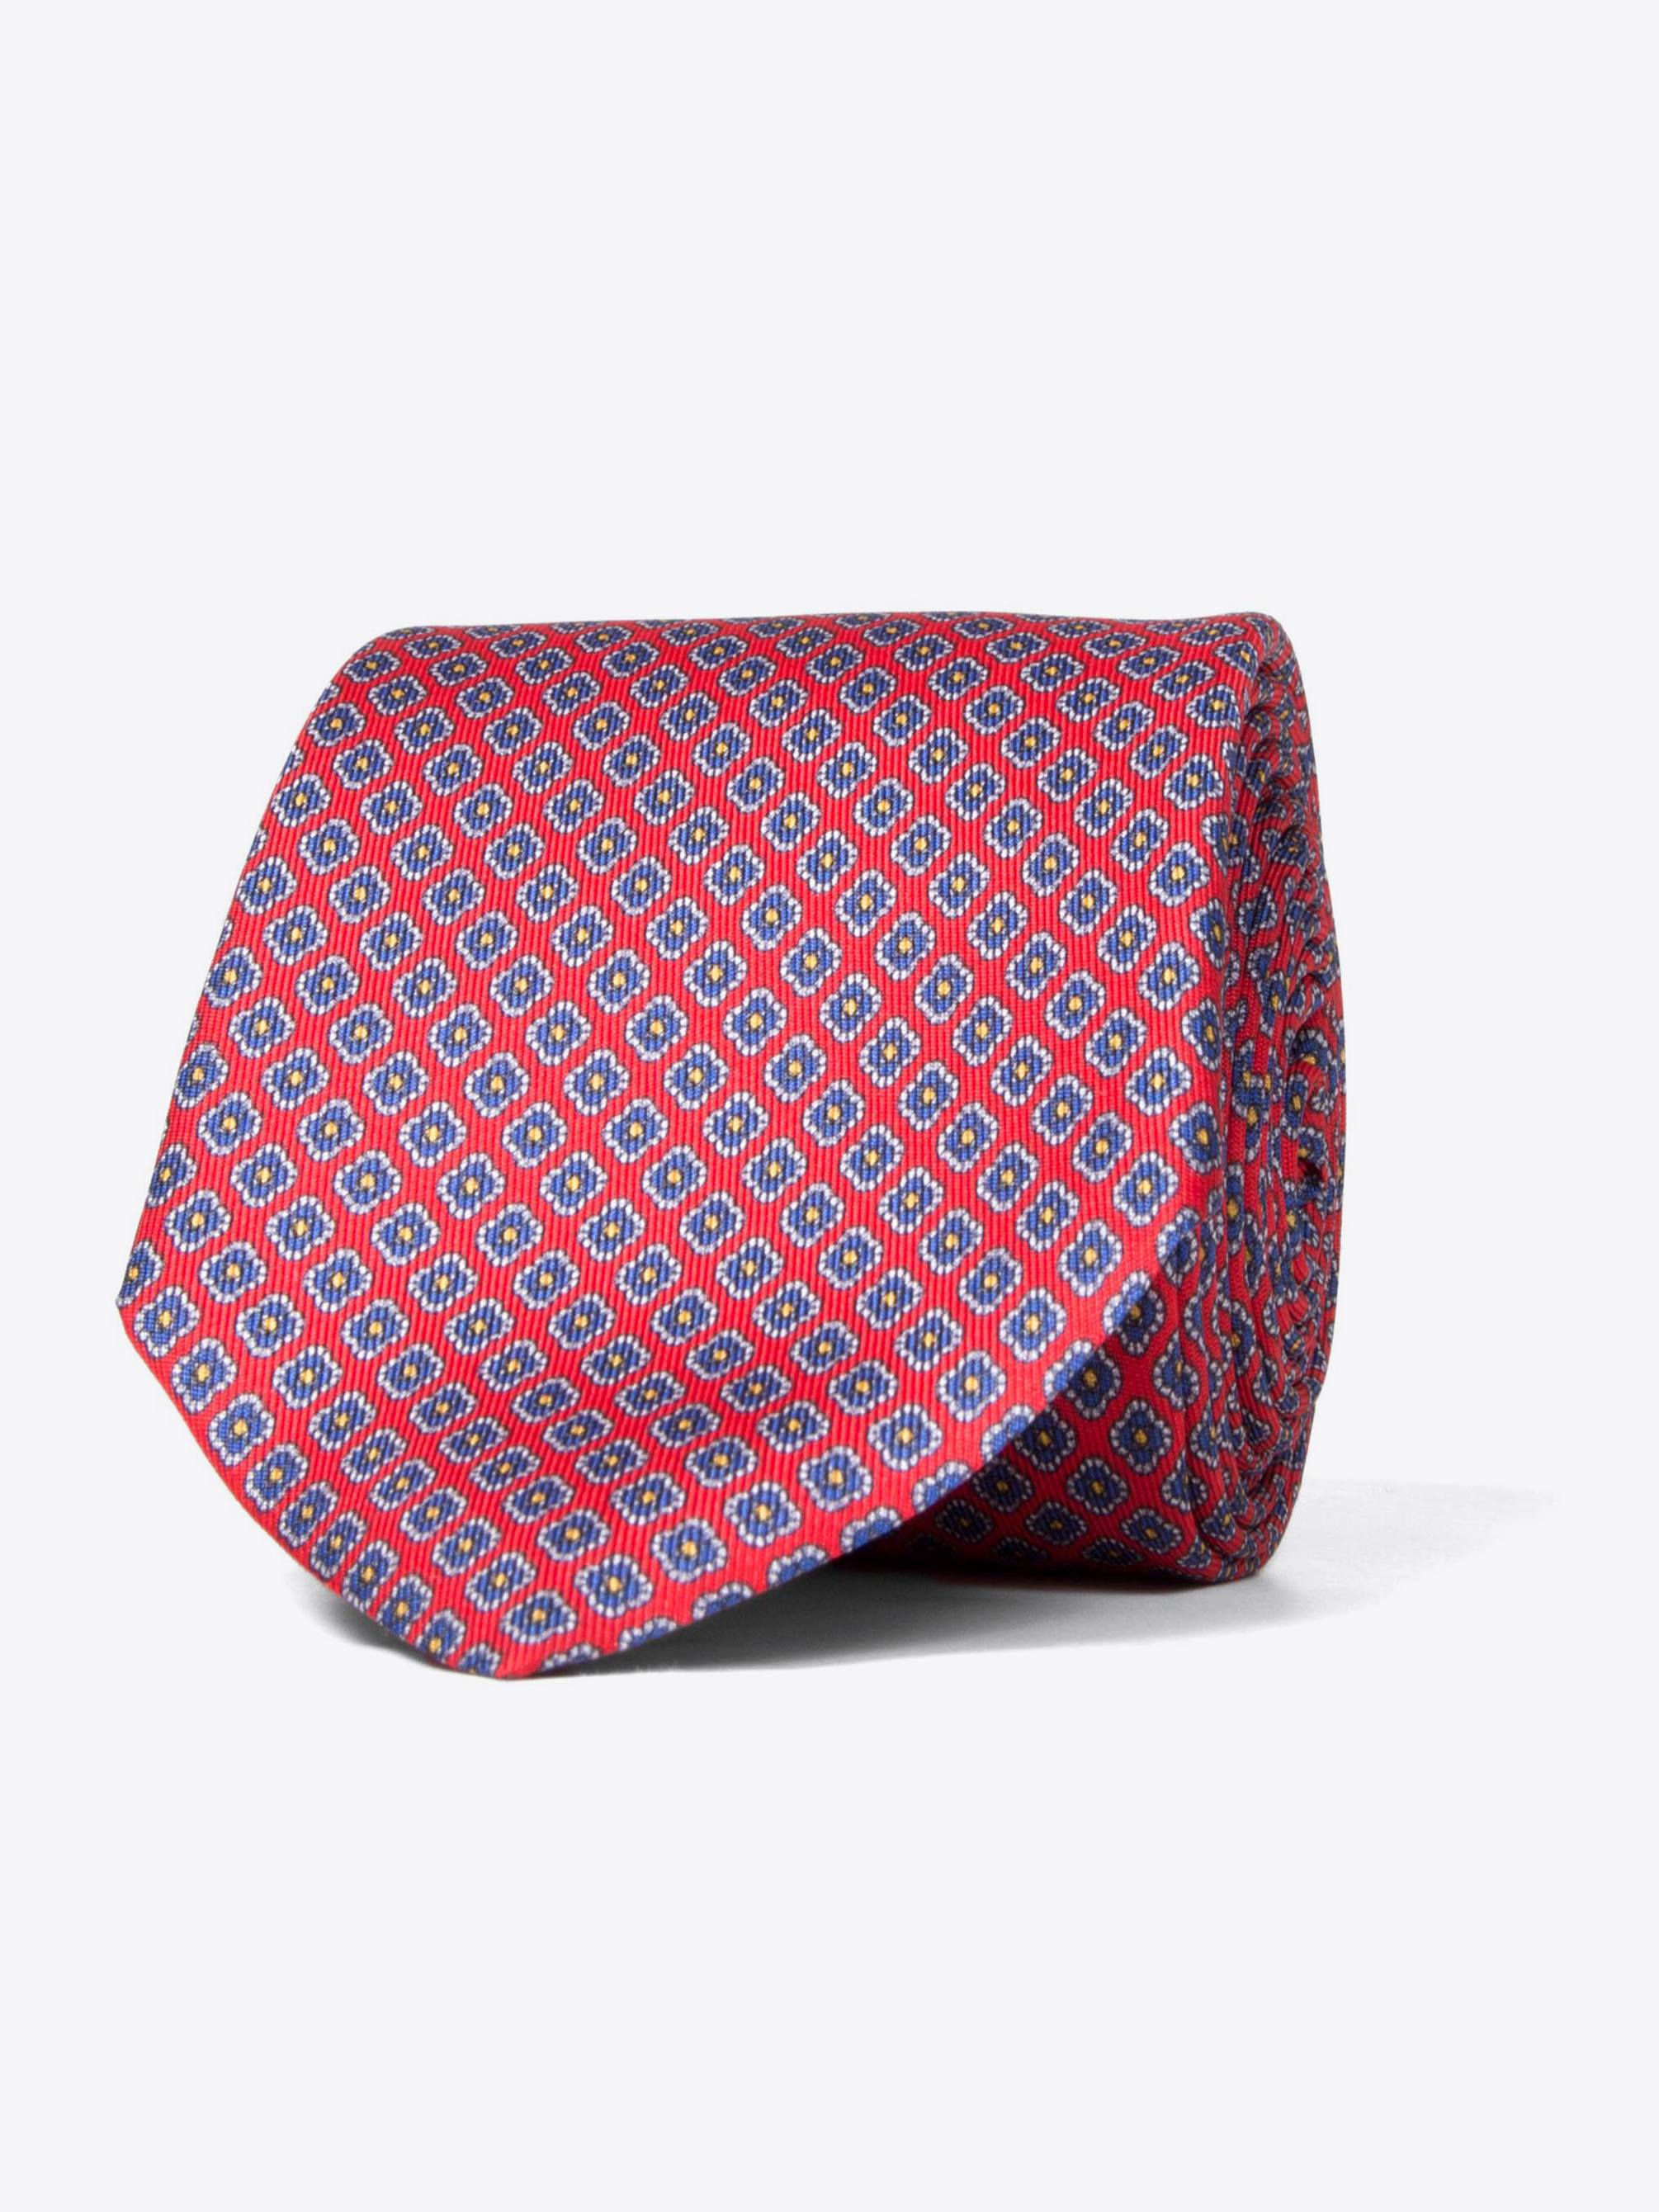 Zoom Image of Veneto Red Print Tie